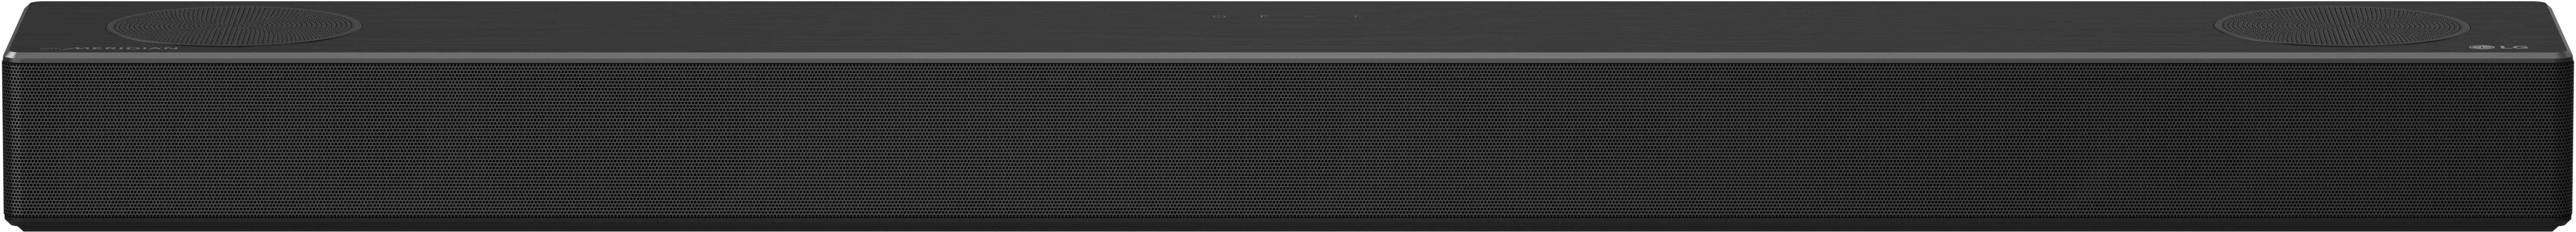 LG Black DSN7CY, Soundbar,